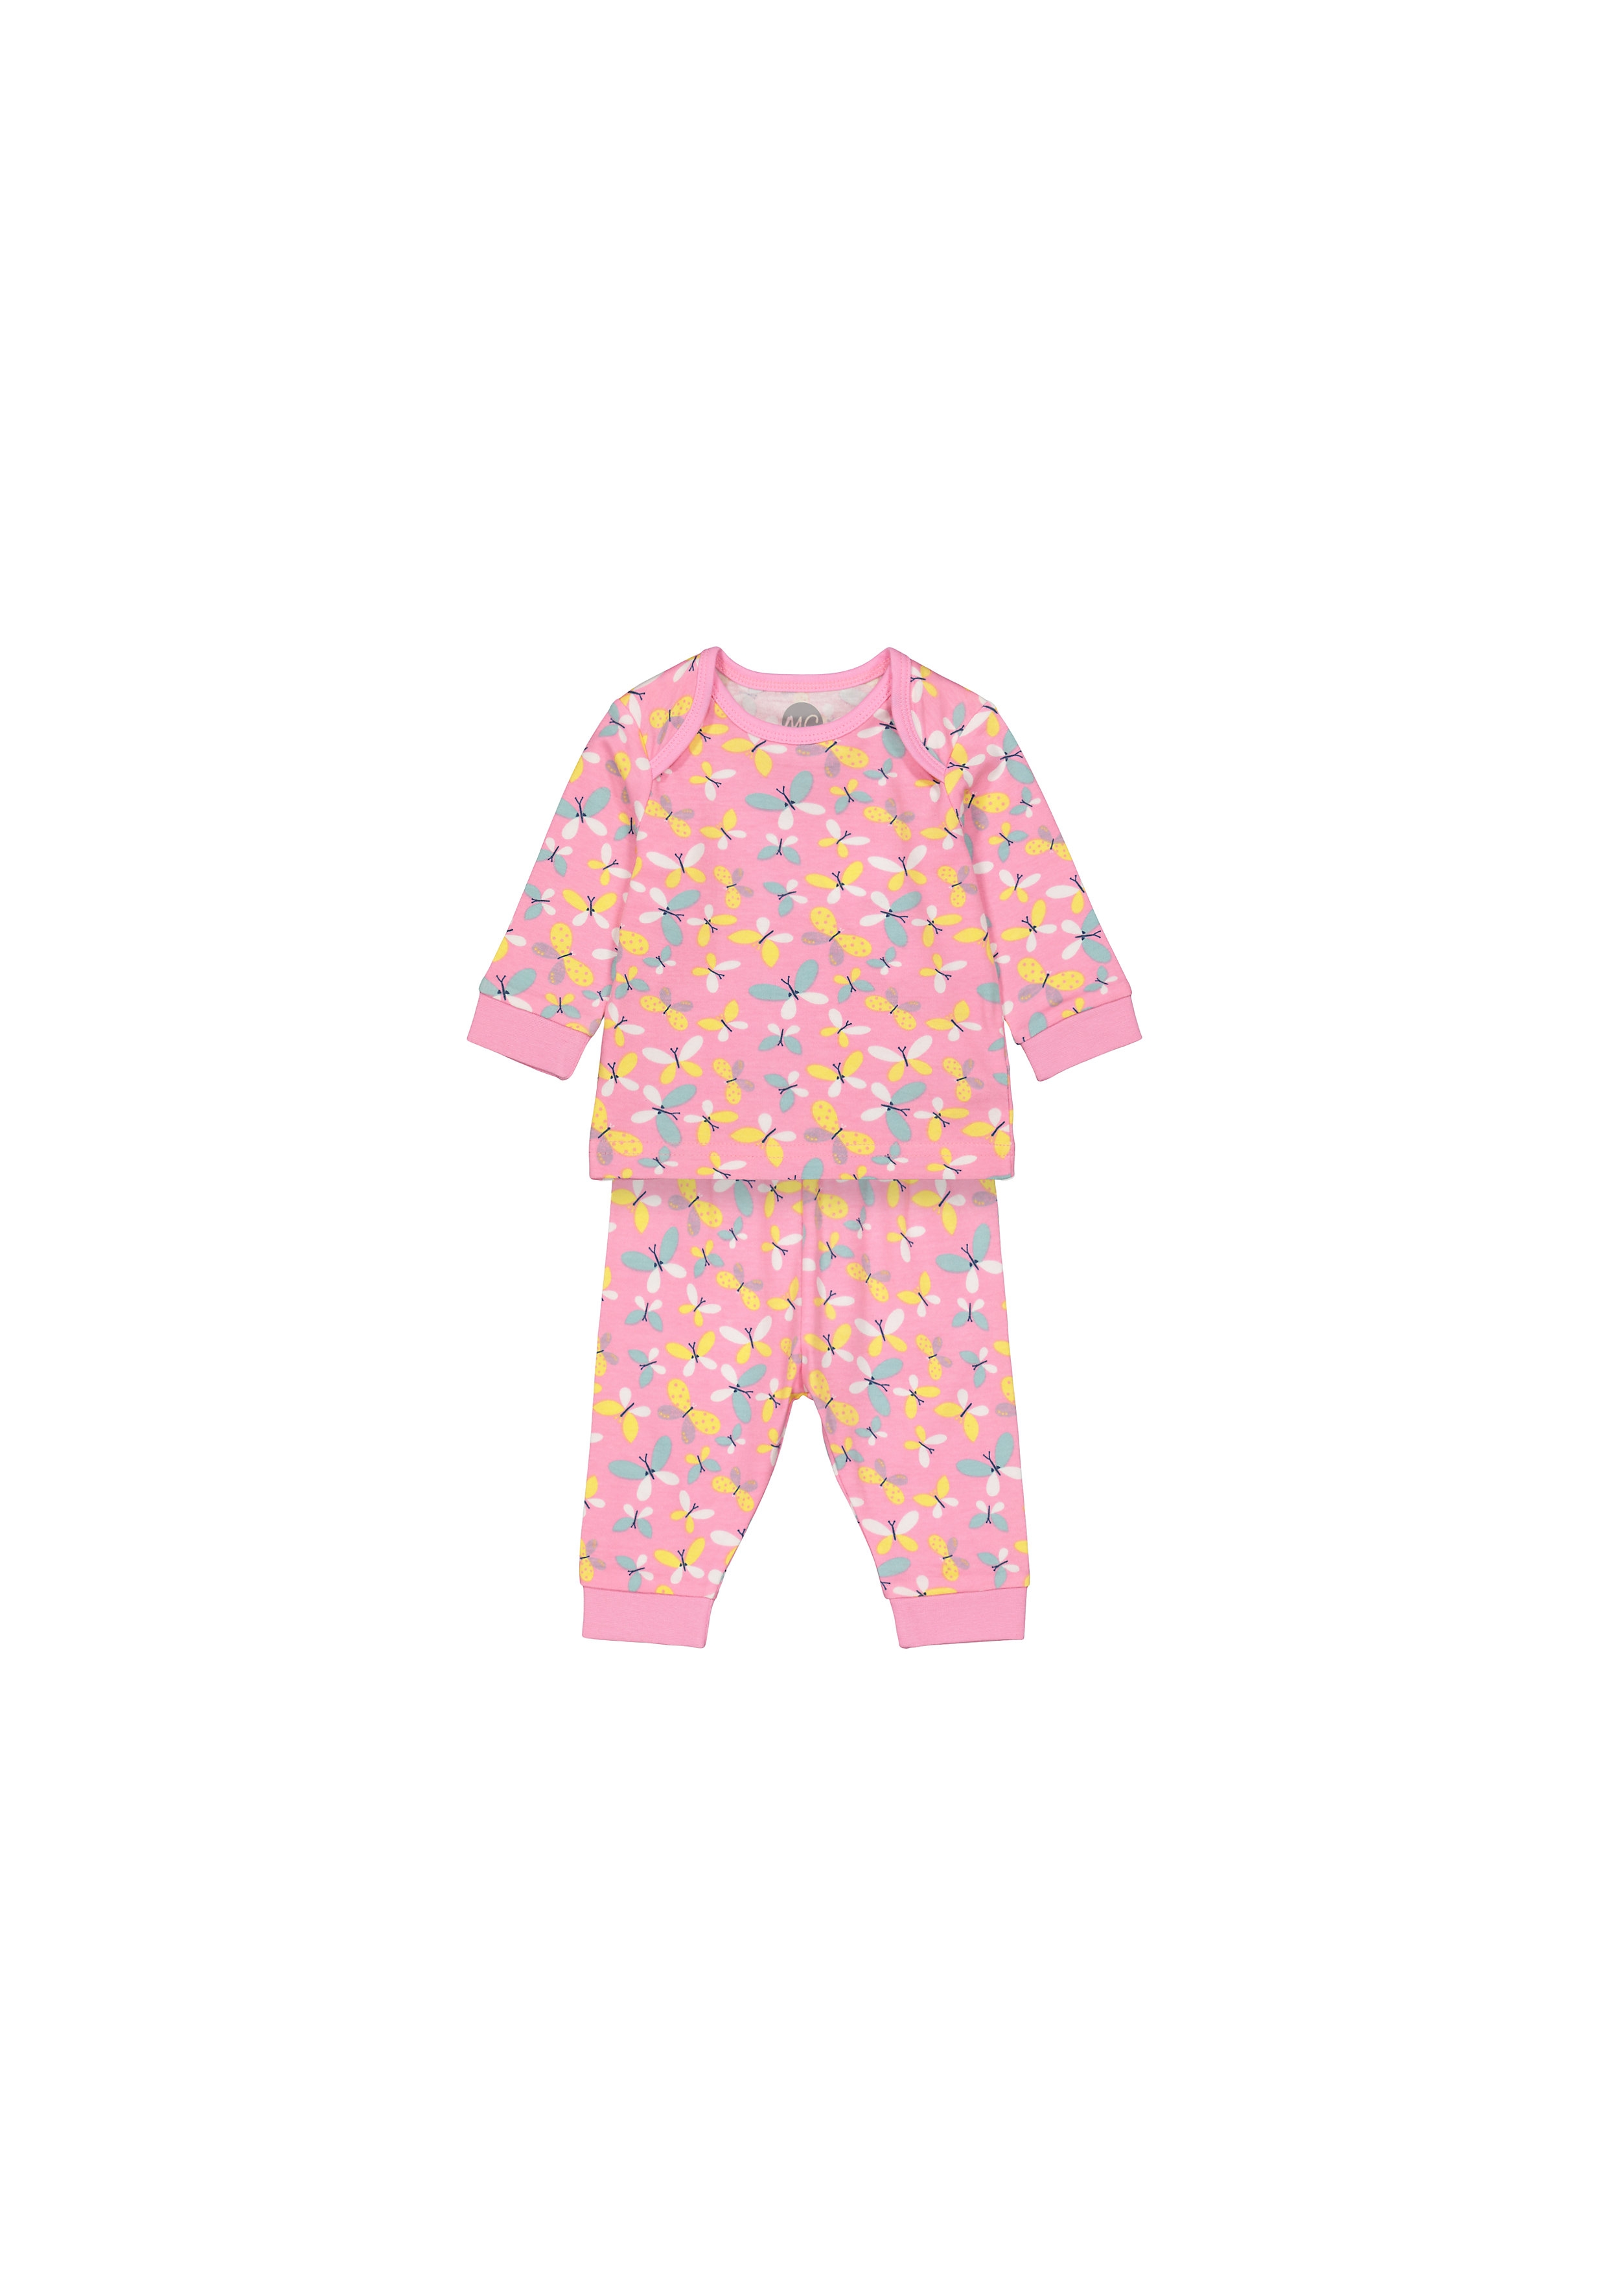 Girls Full Sleeves Pyjamas Butterfly Print - Pink